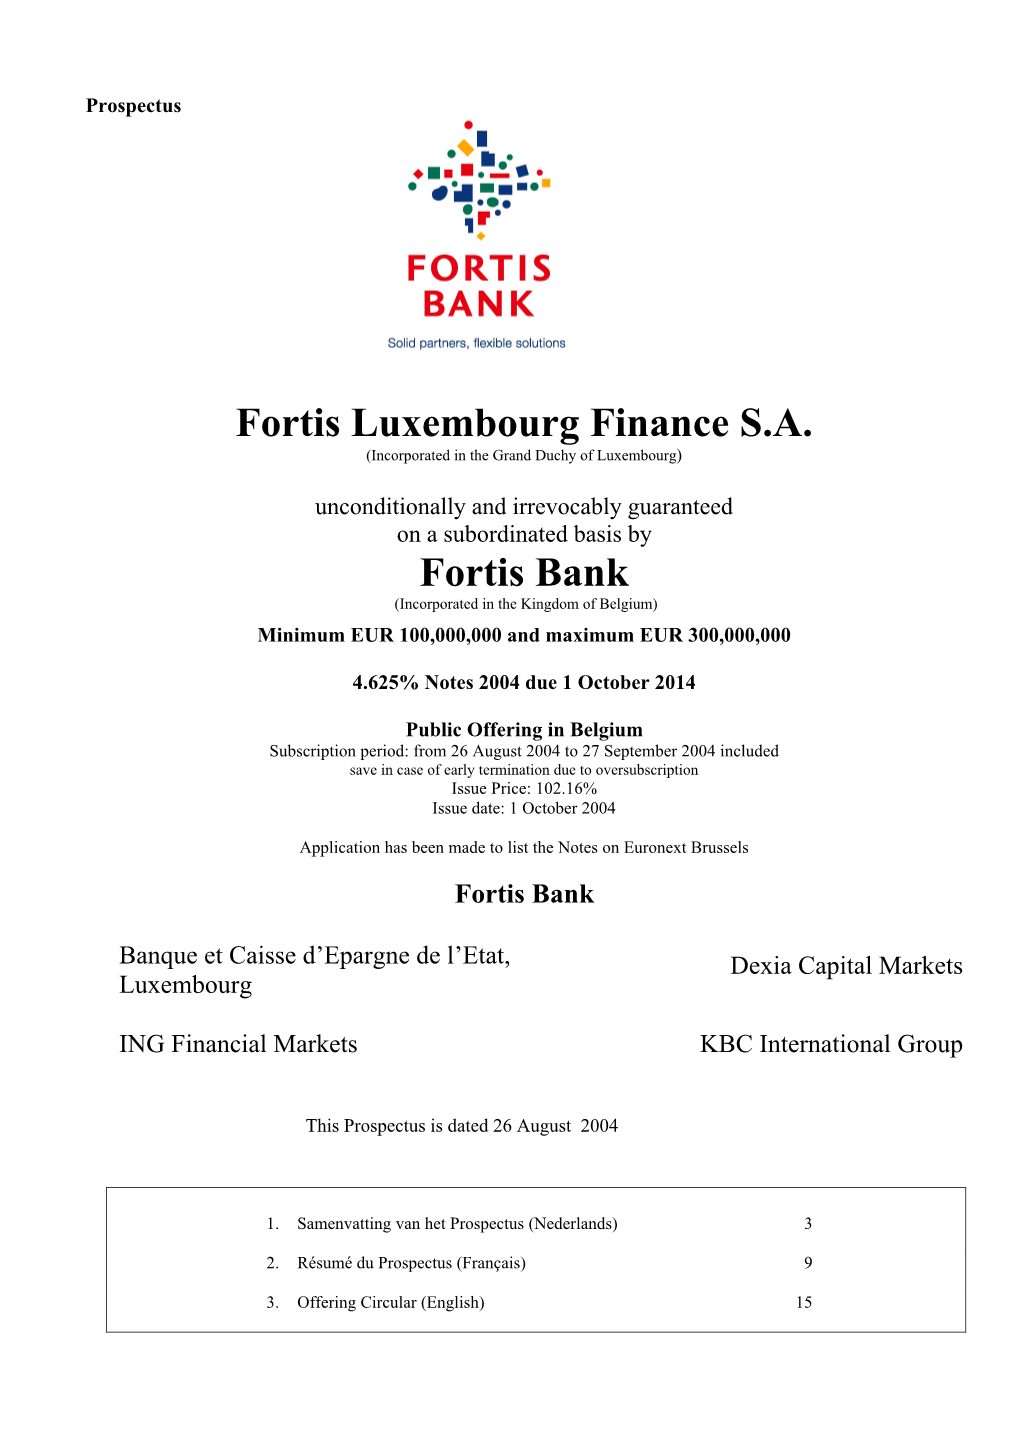 Fortis Luxembourg Finance S.A. Fortis Bank Nv-Sa Rue Aldringen 14, Montagne Du Parc 3 L-1118 Luxembourg